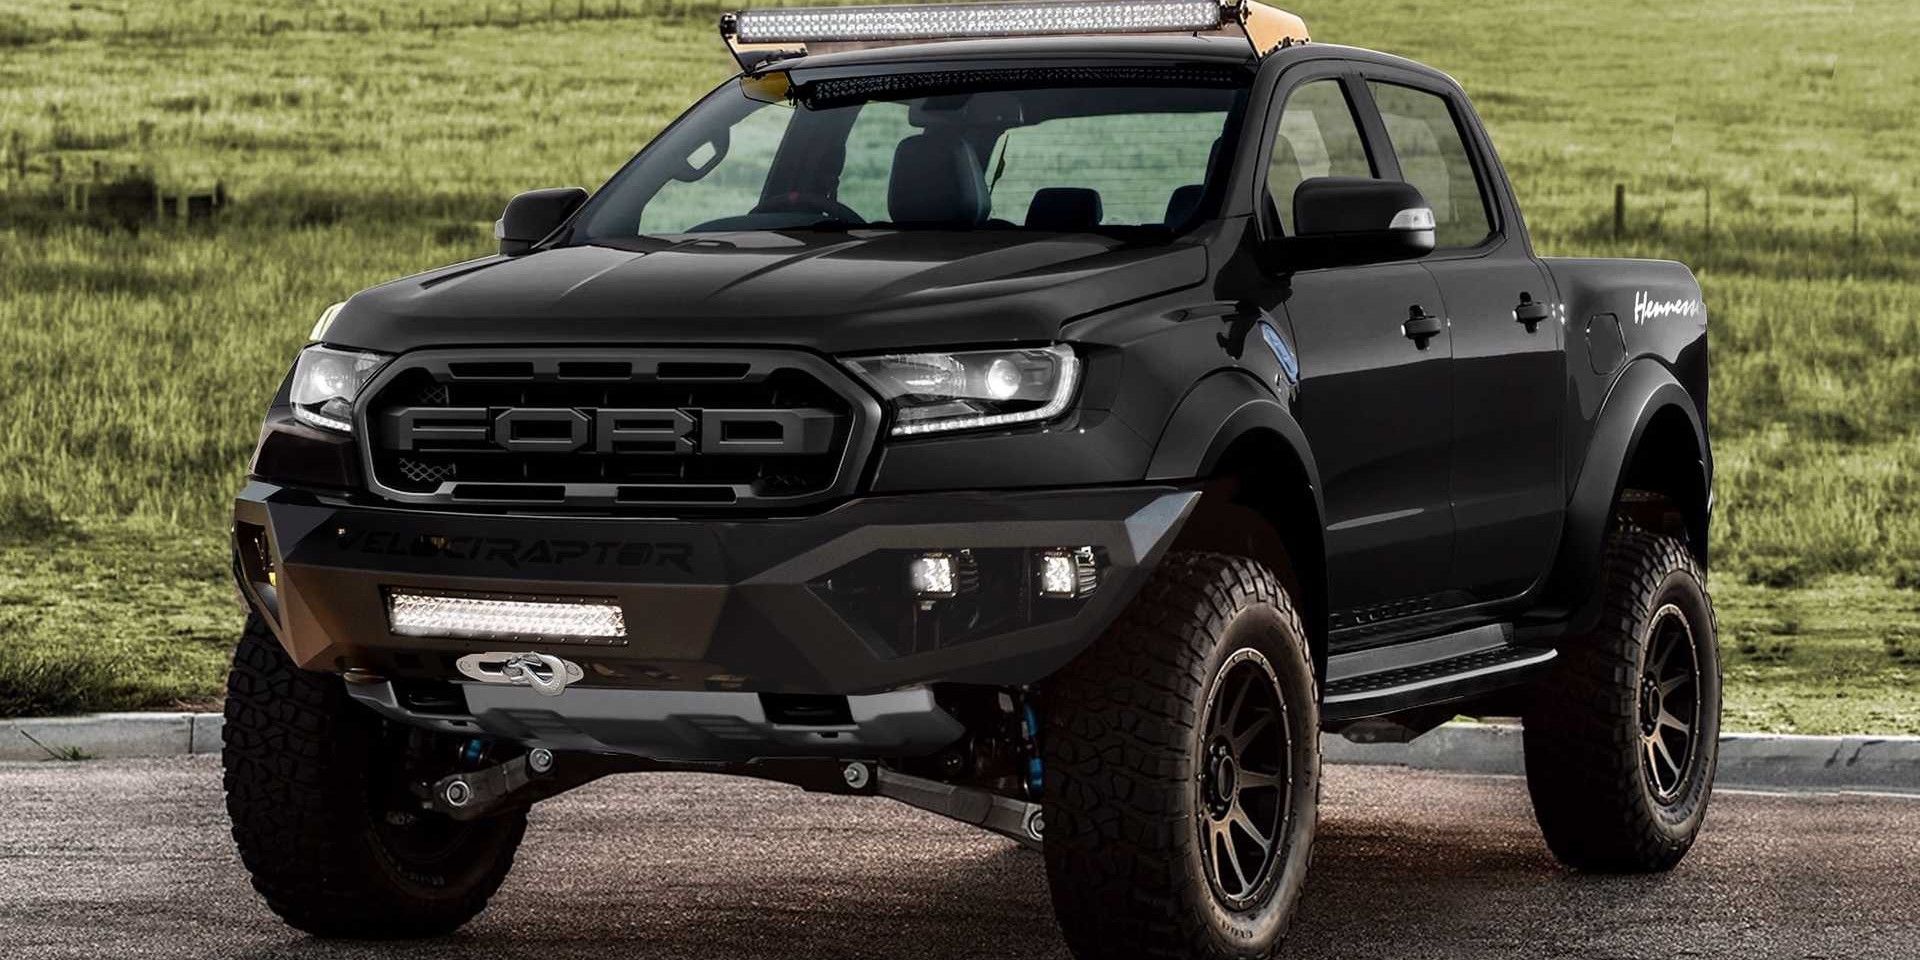 Ford Ranger Raptor Black - Berchex Auto